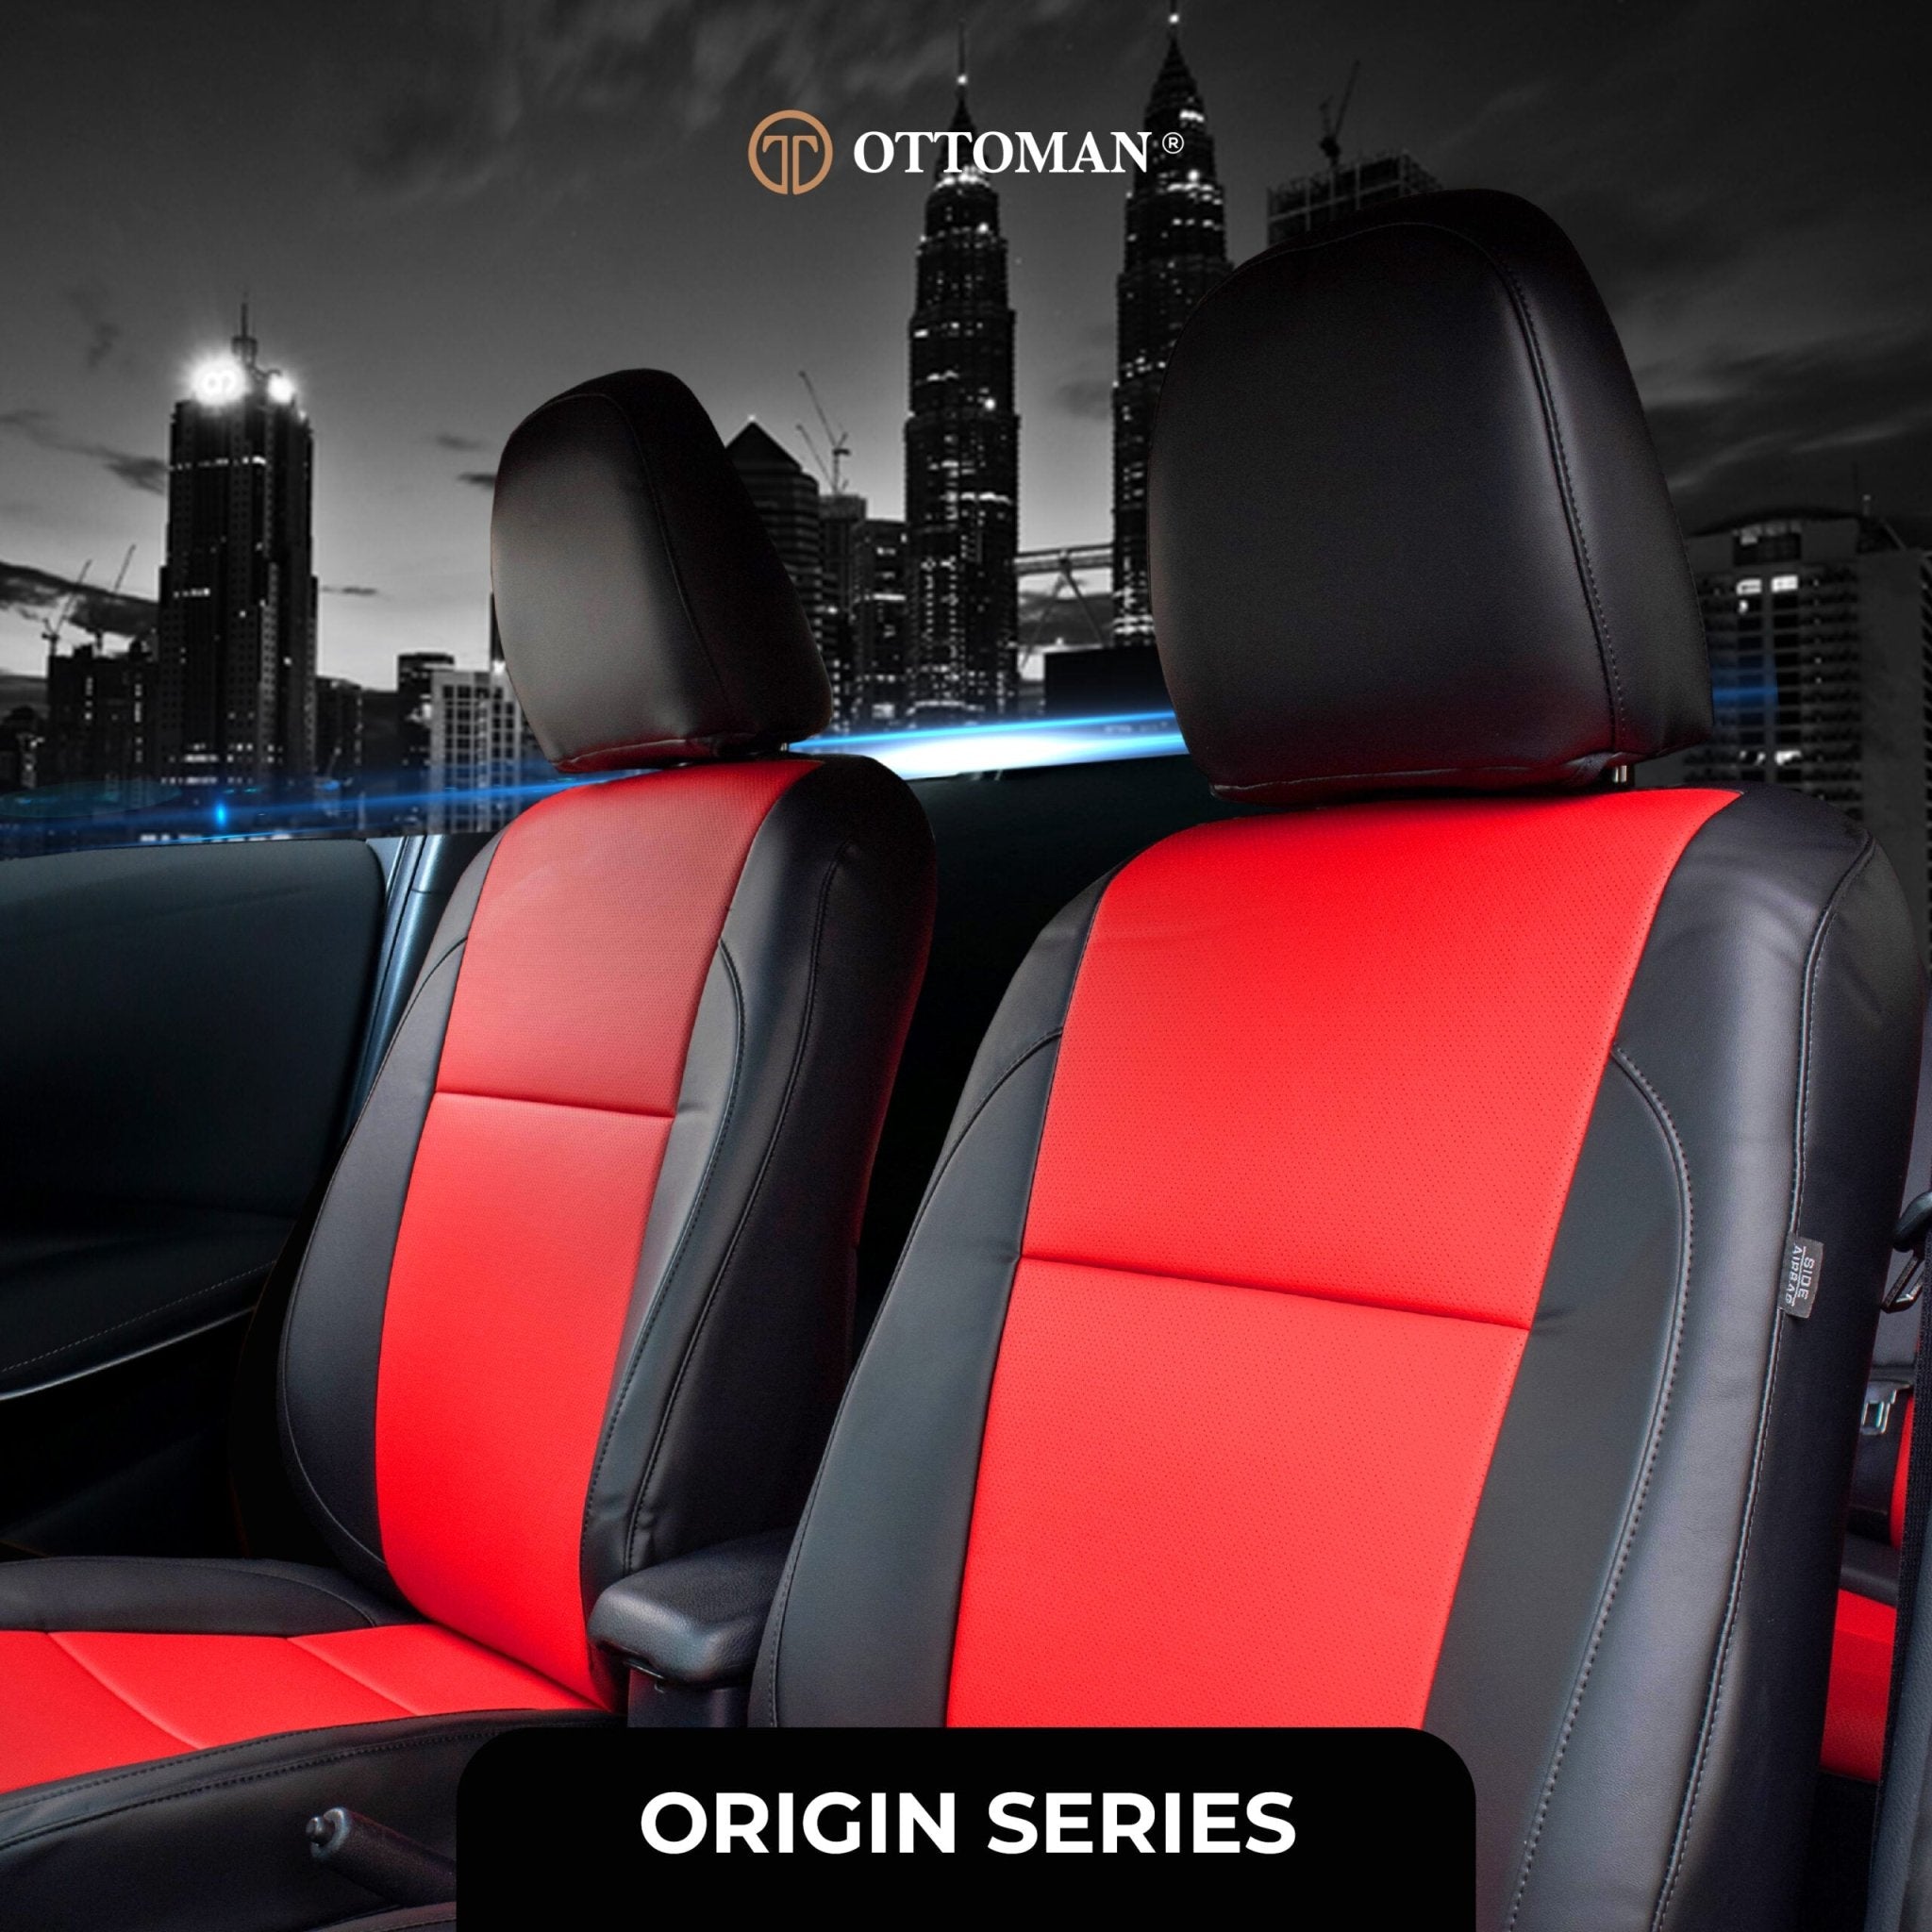 Ford Everest (2016-2020) Ottoman Seat Cover Seat Cover in Klang Selangor, Penang, Johor Bahru - Ottoman Car Mats